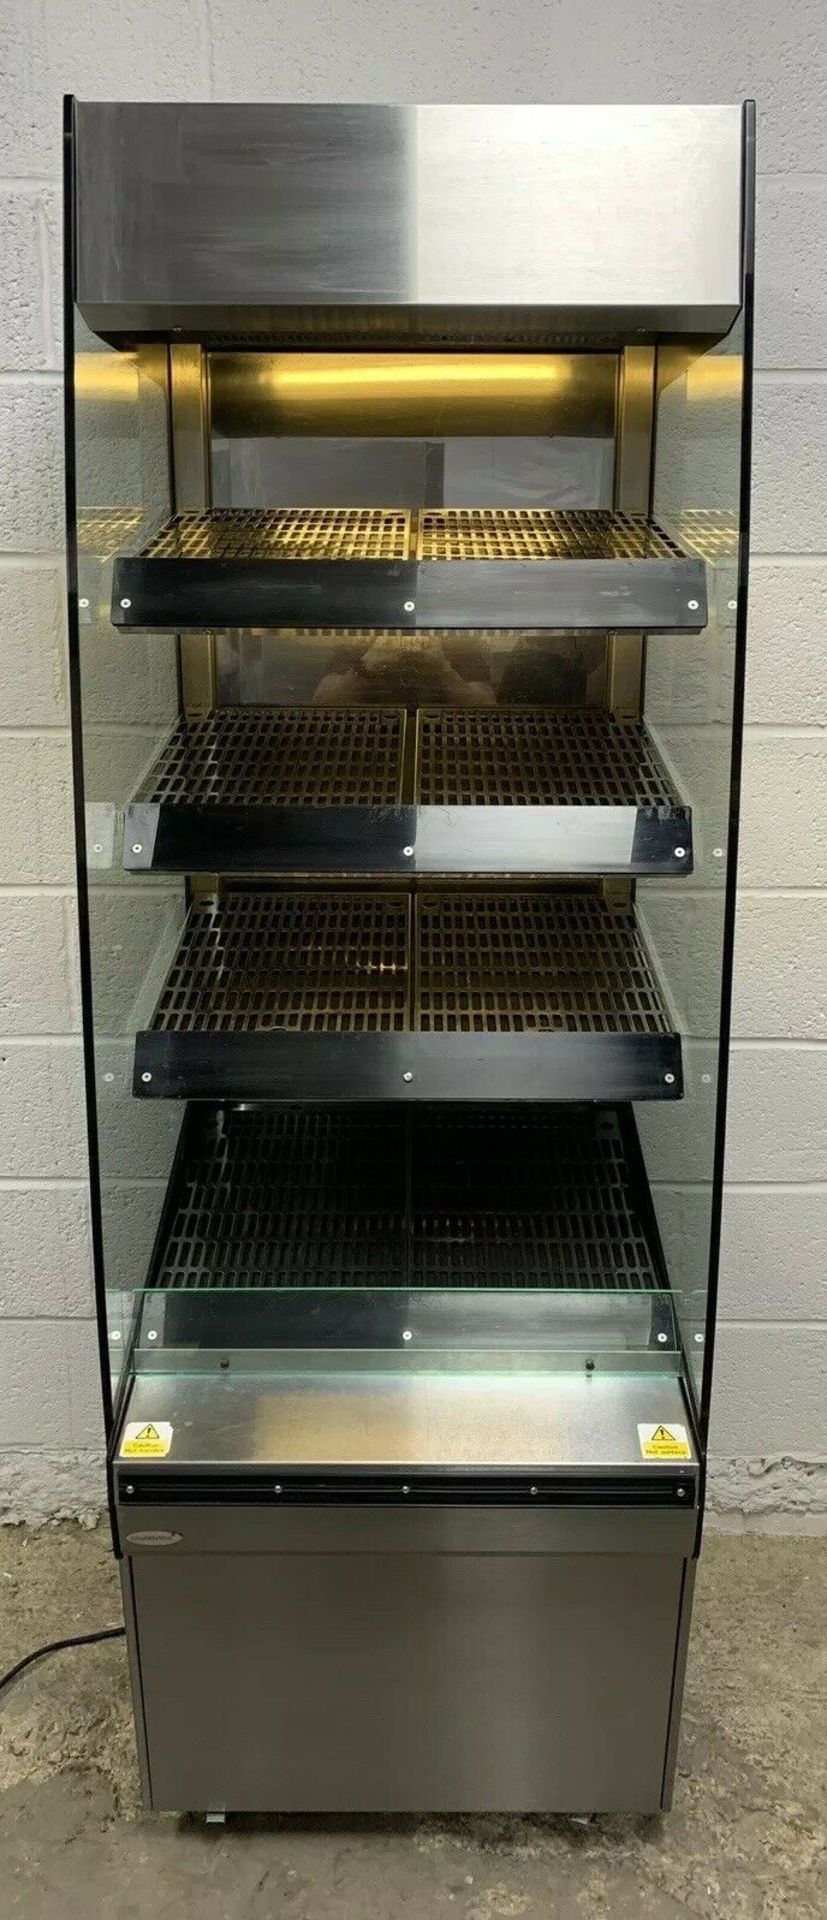 Counterline EFH600 Hot Food Display Unit, - Image 7 of 7